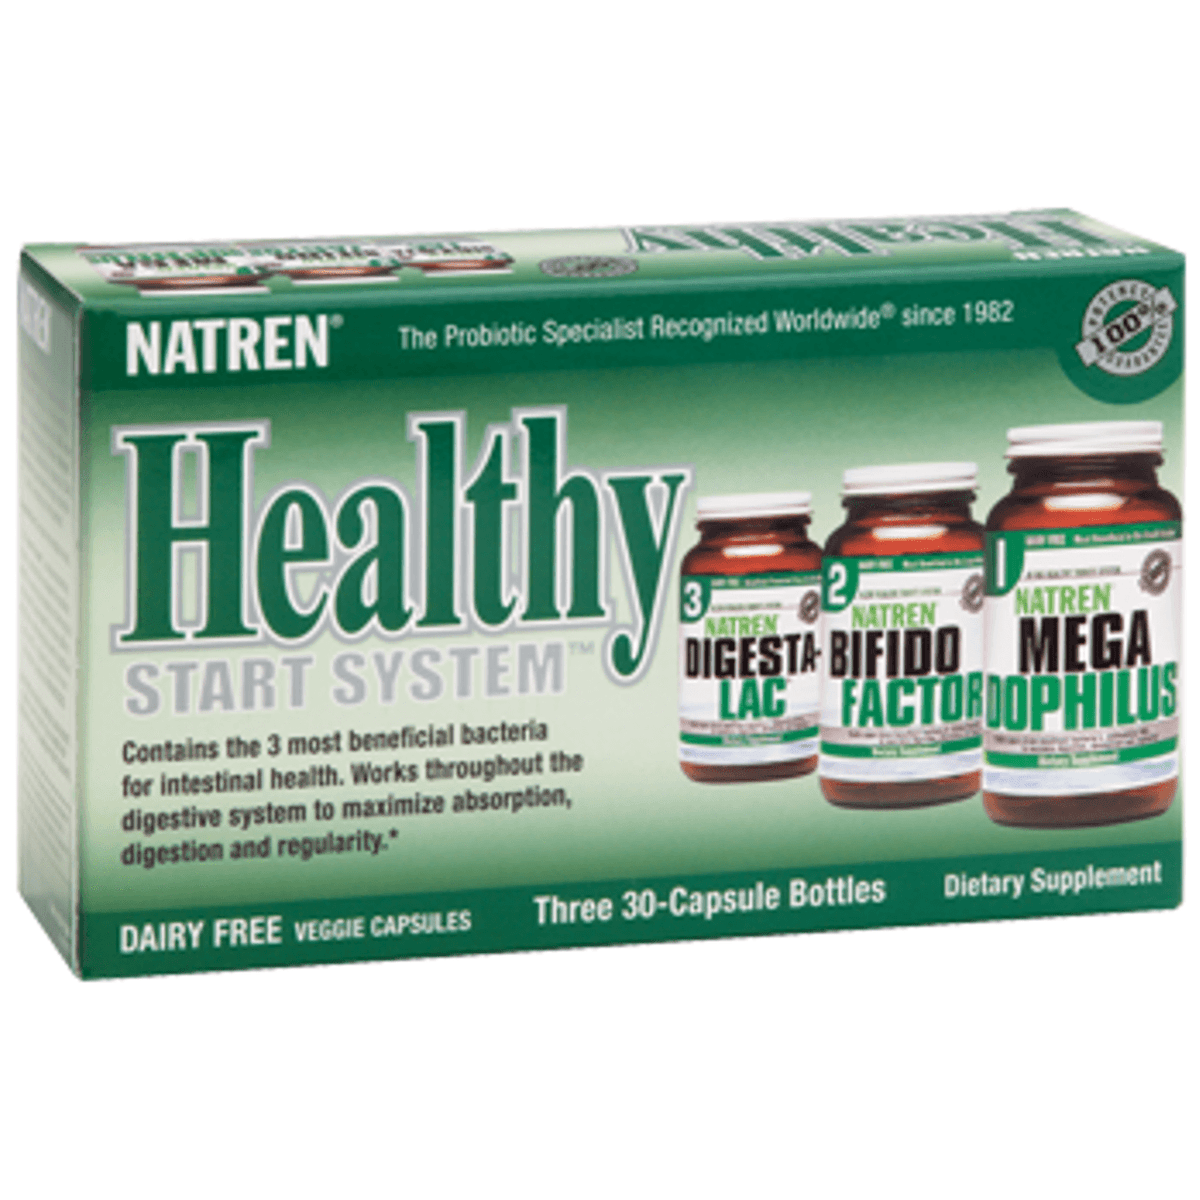 Natren Healthy Start System Dairy Free 3 Bottles of 30 Caps Supplements - Probiotics at Village Vitamin Store